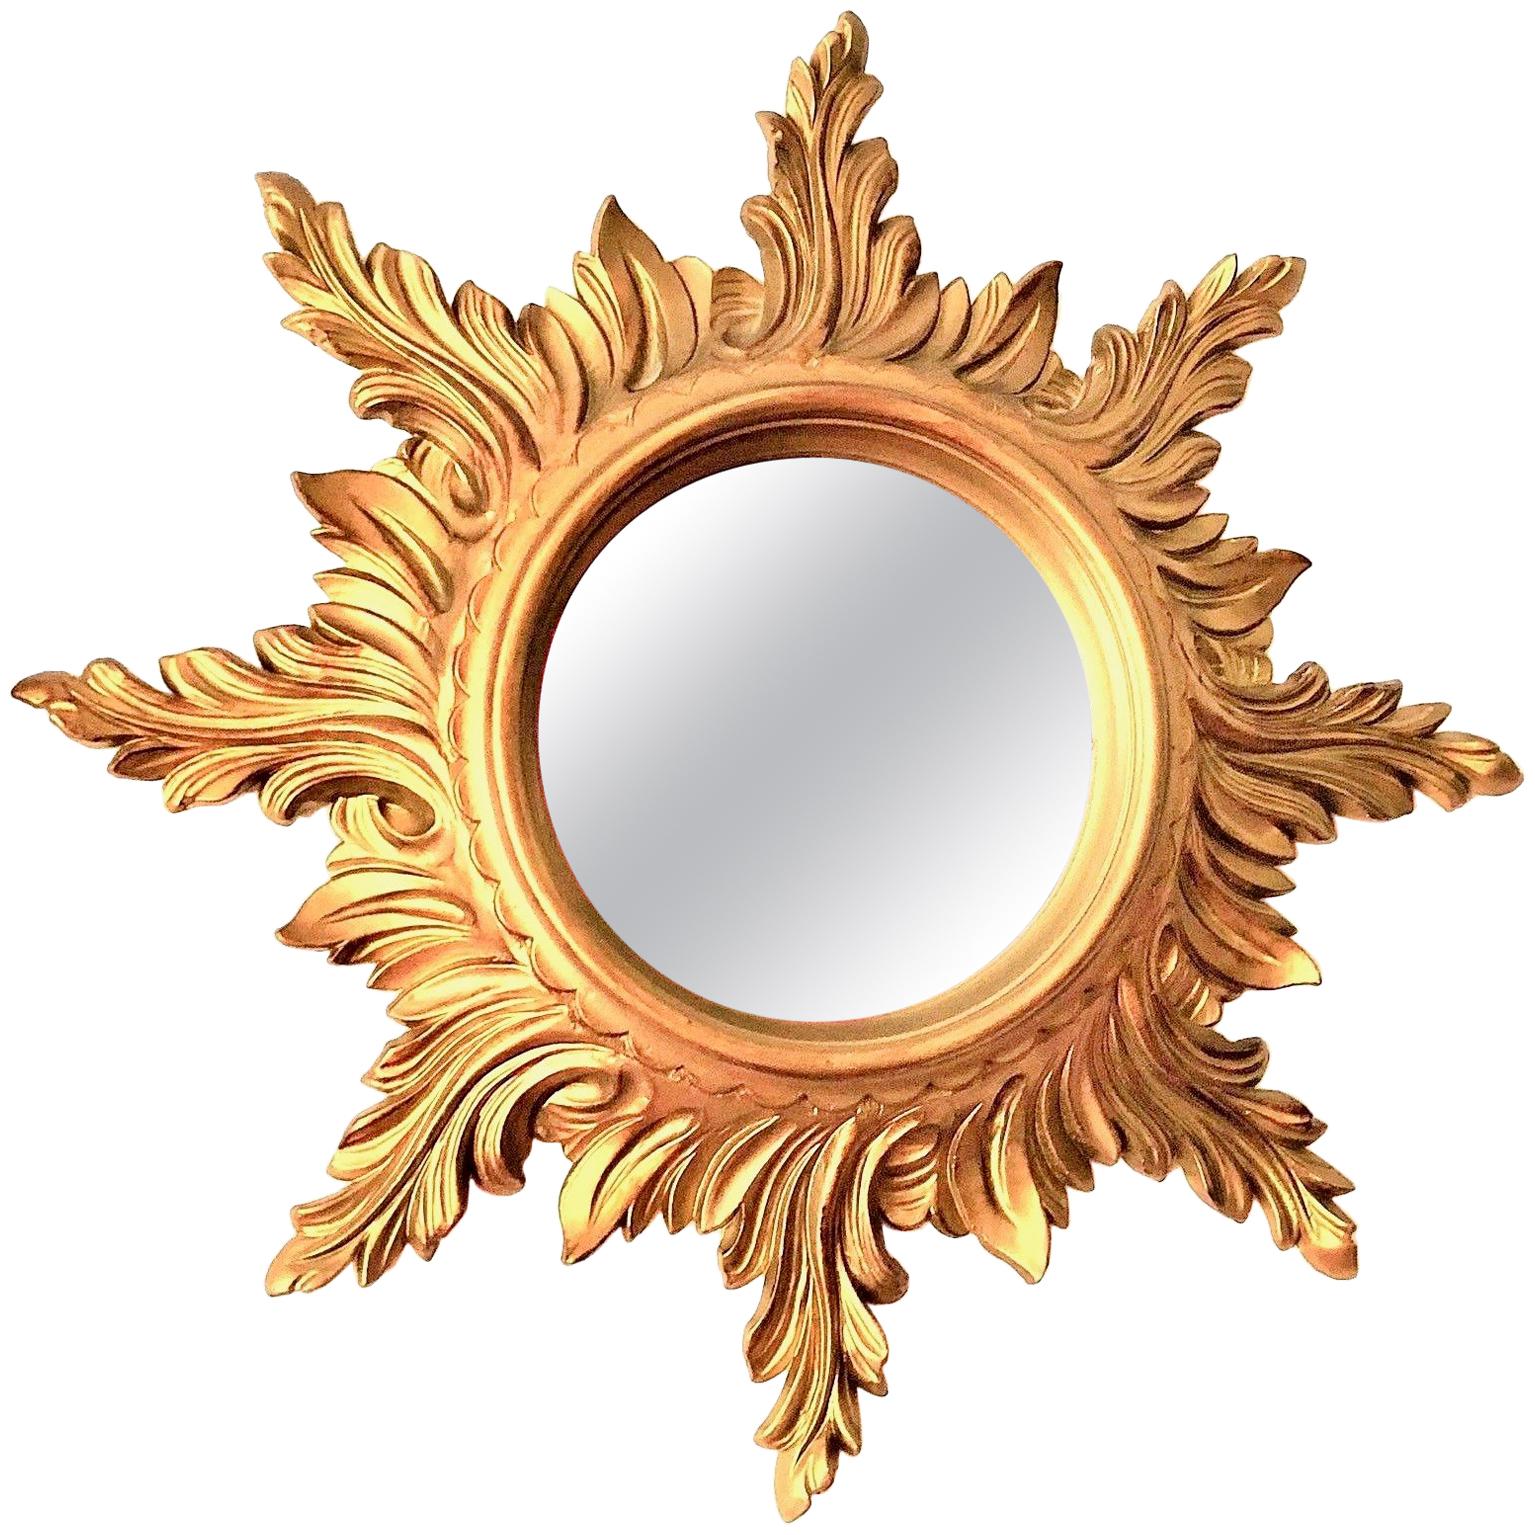 Beautiful Italian Starburst Sunburst Mirror circa 1980s Made in Italy